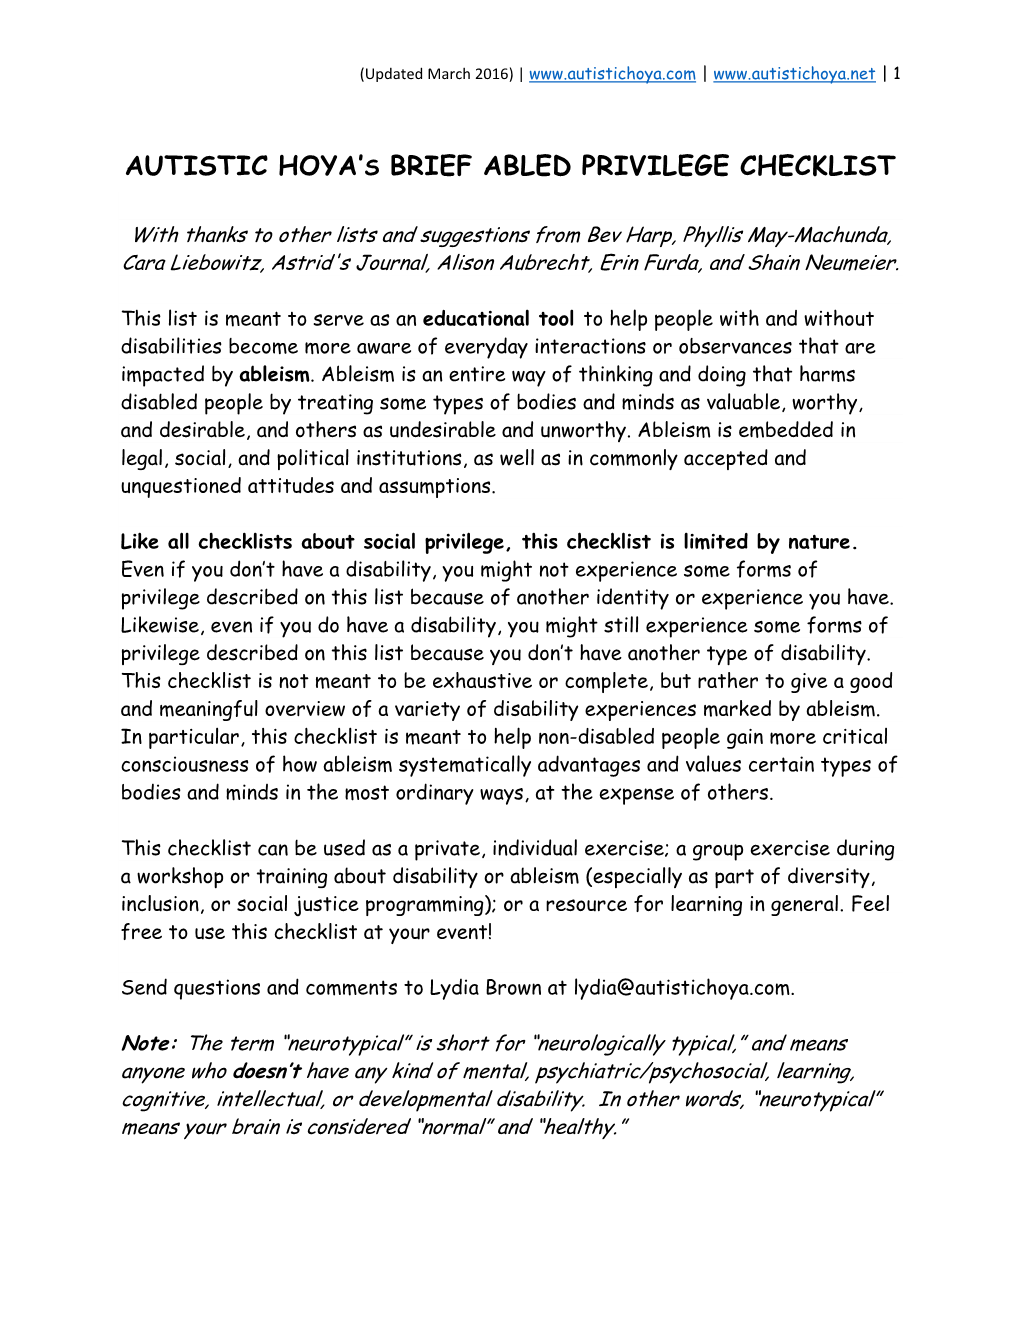 Autistic Hoya's Brief Abled Privilege Checklist